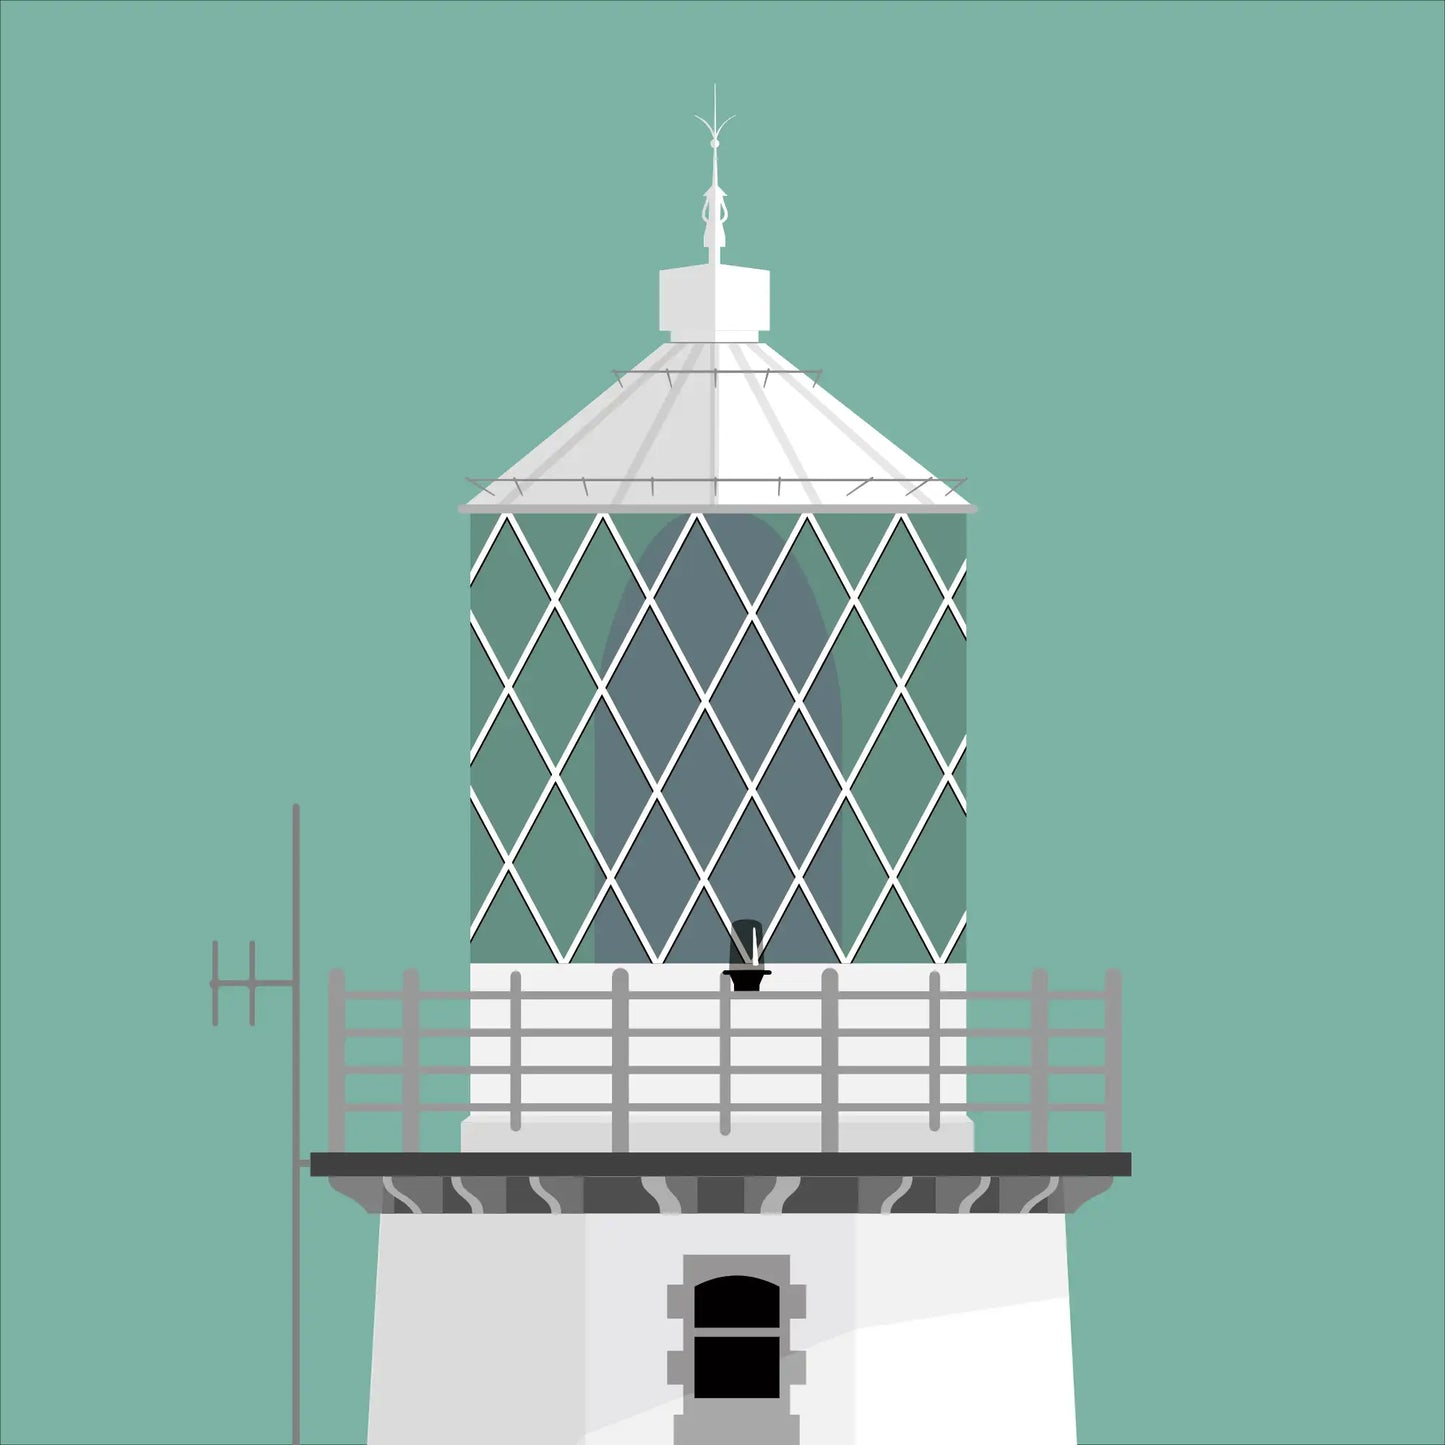 Blackhead lighthouse, County Antrim, Ireland detail